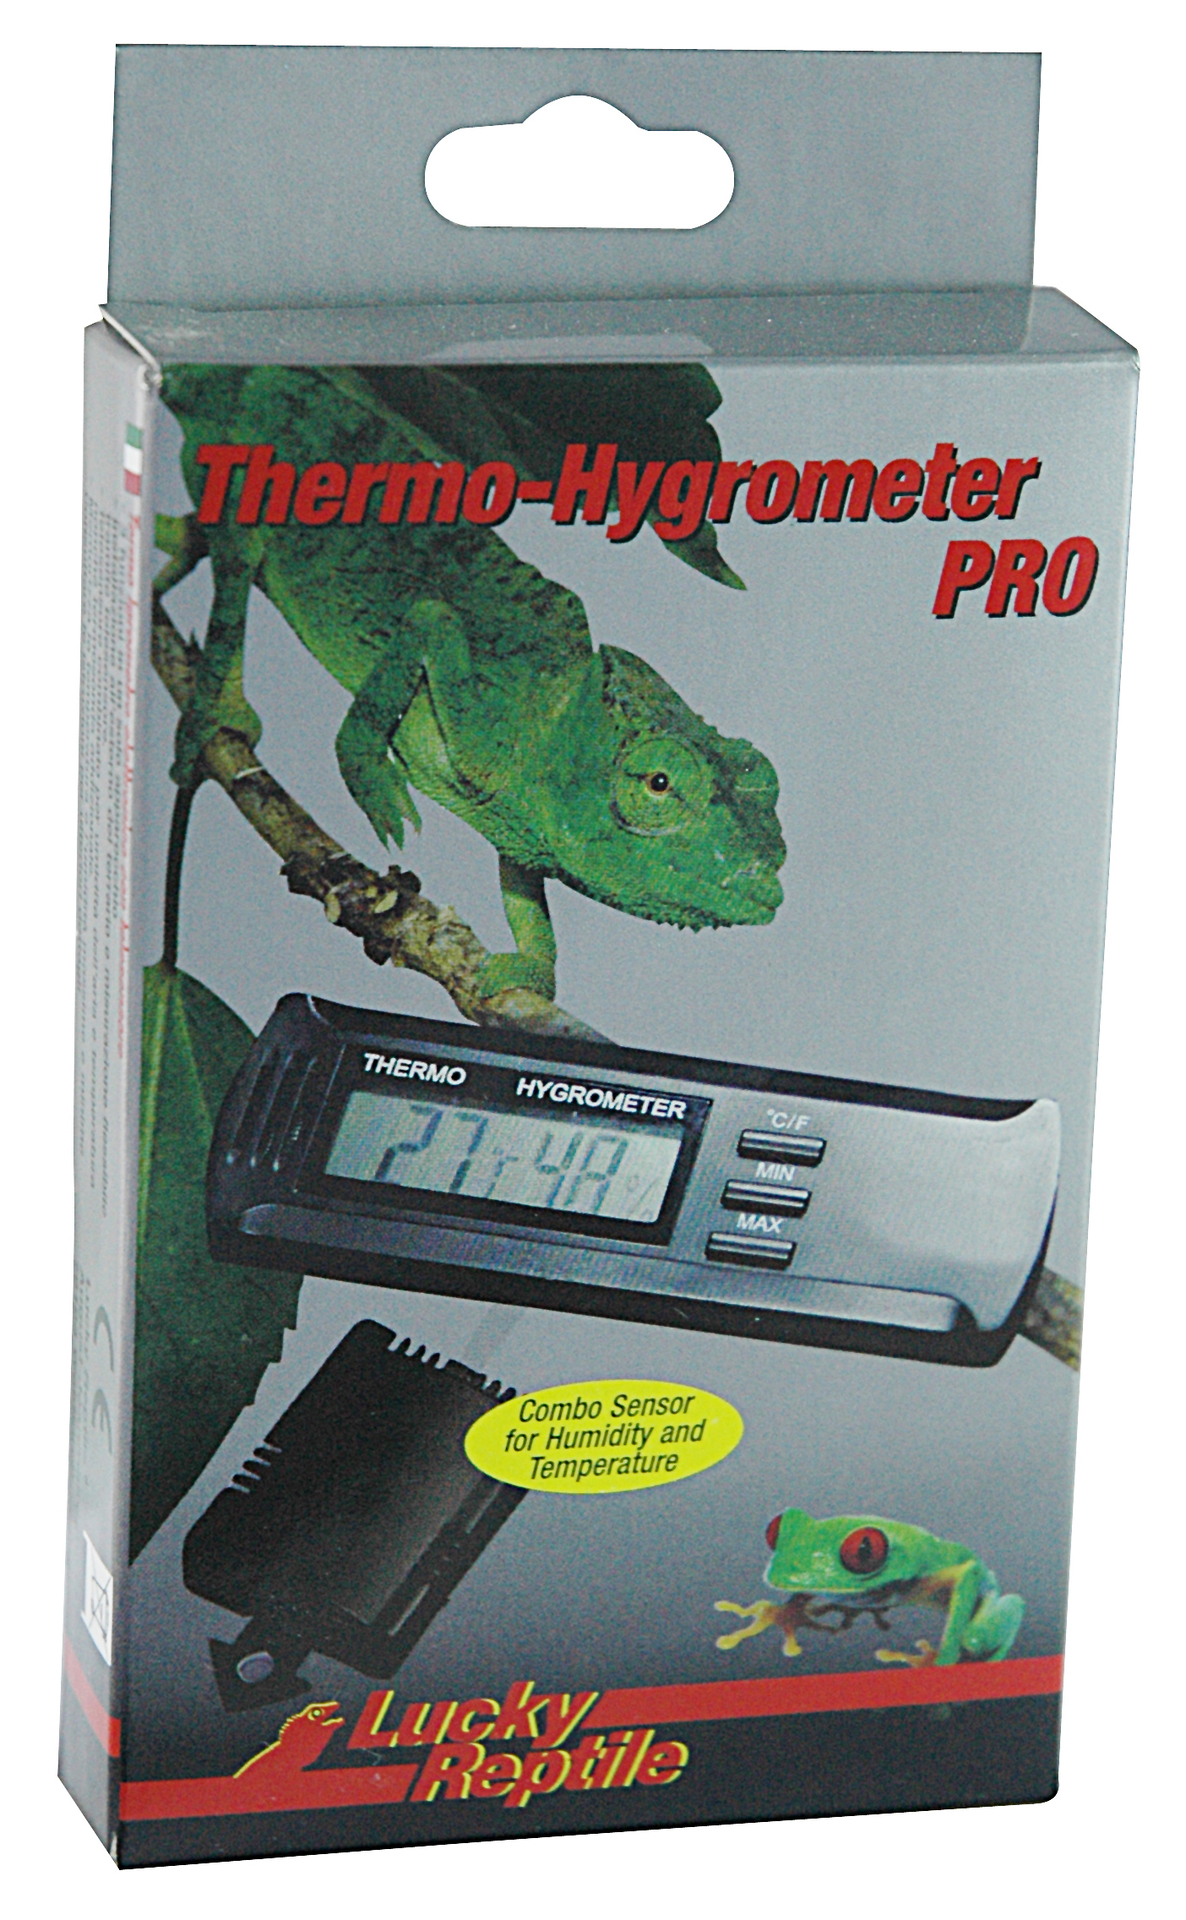 Thermometer-Hygrometer  PRO